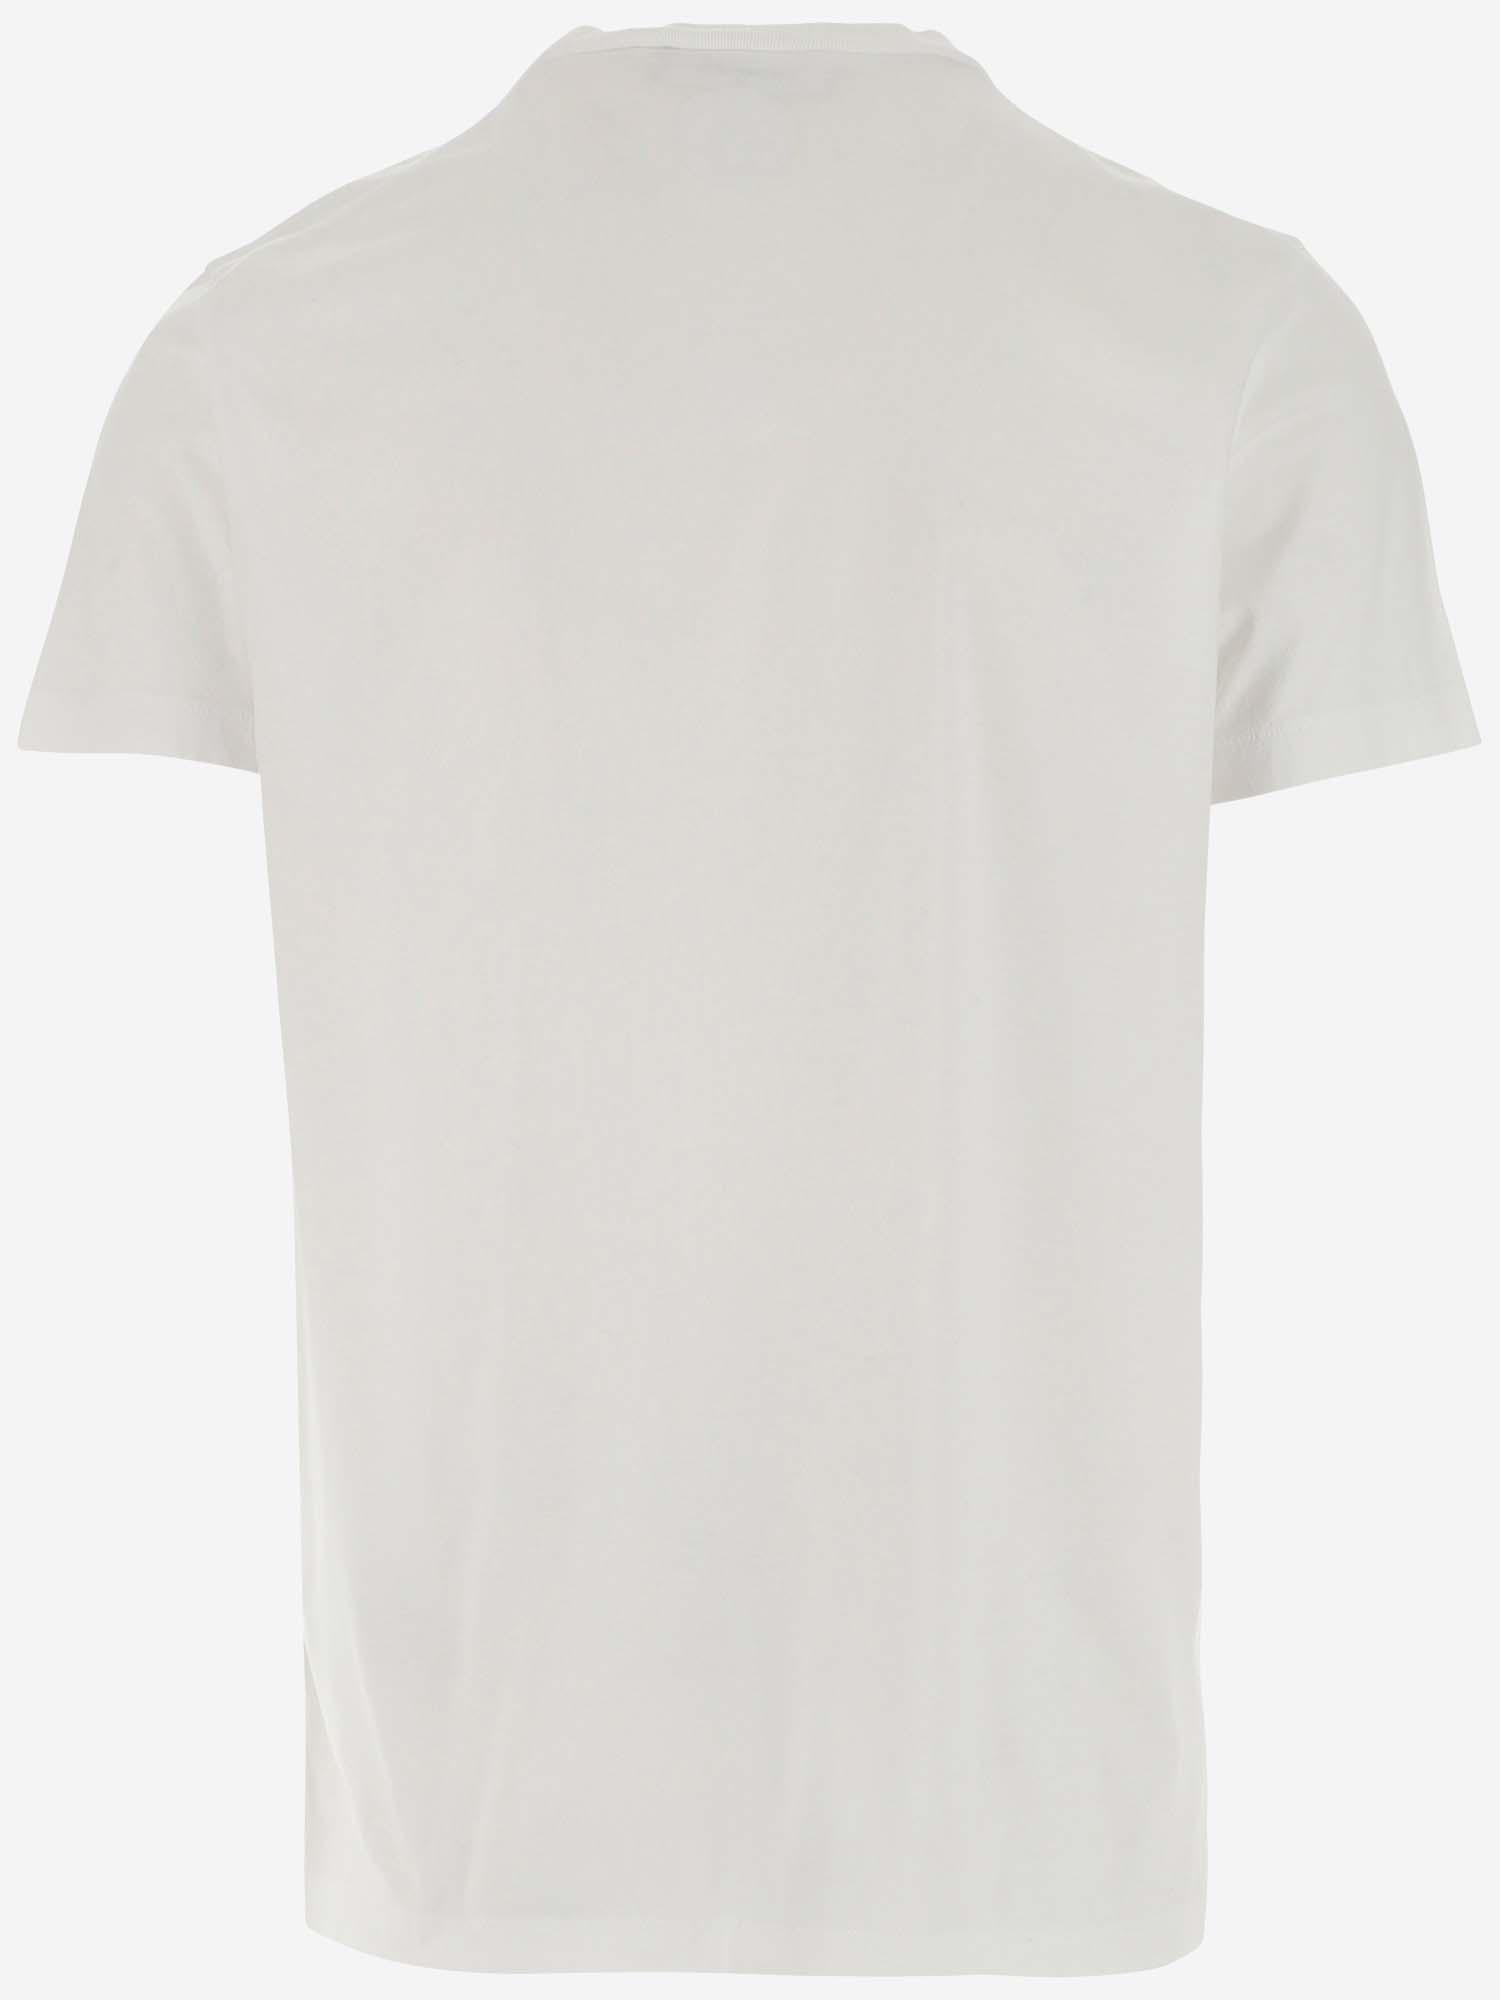 DSquared² Invicta X Dsquared T-shirt for Men | Lyst